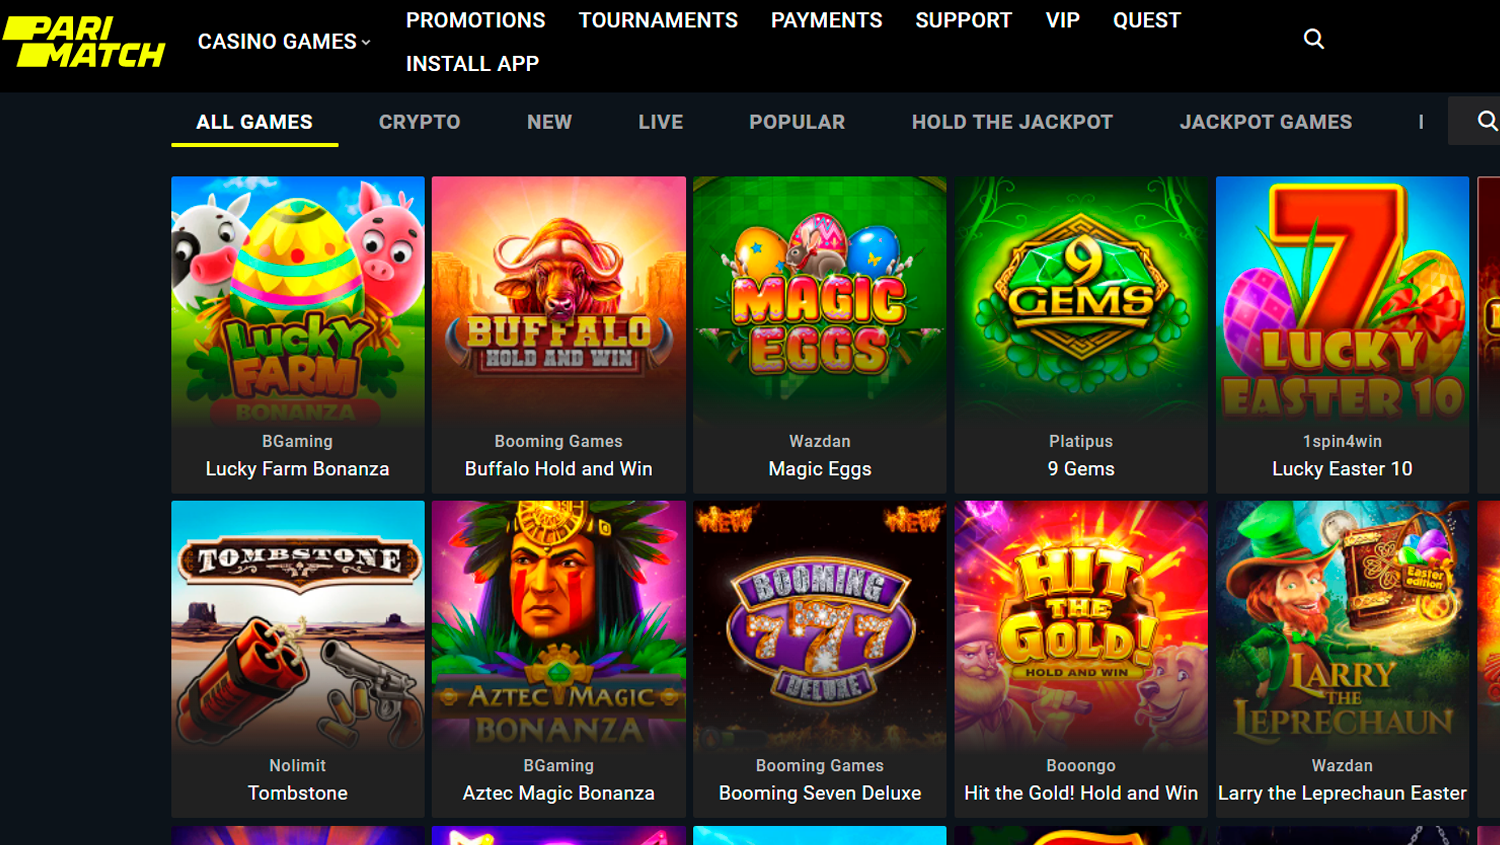 All games category on Parimatch casino site and Parimatch logo